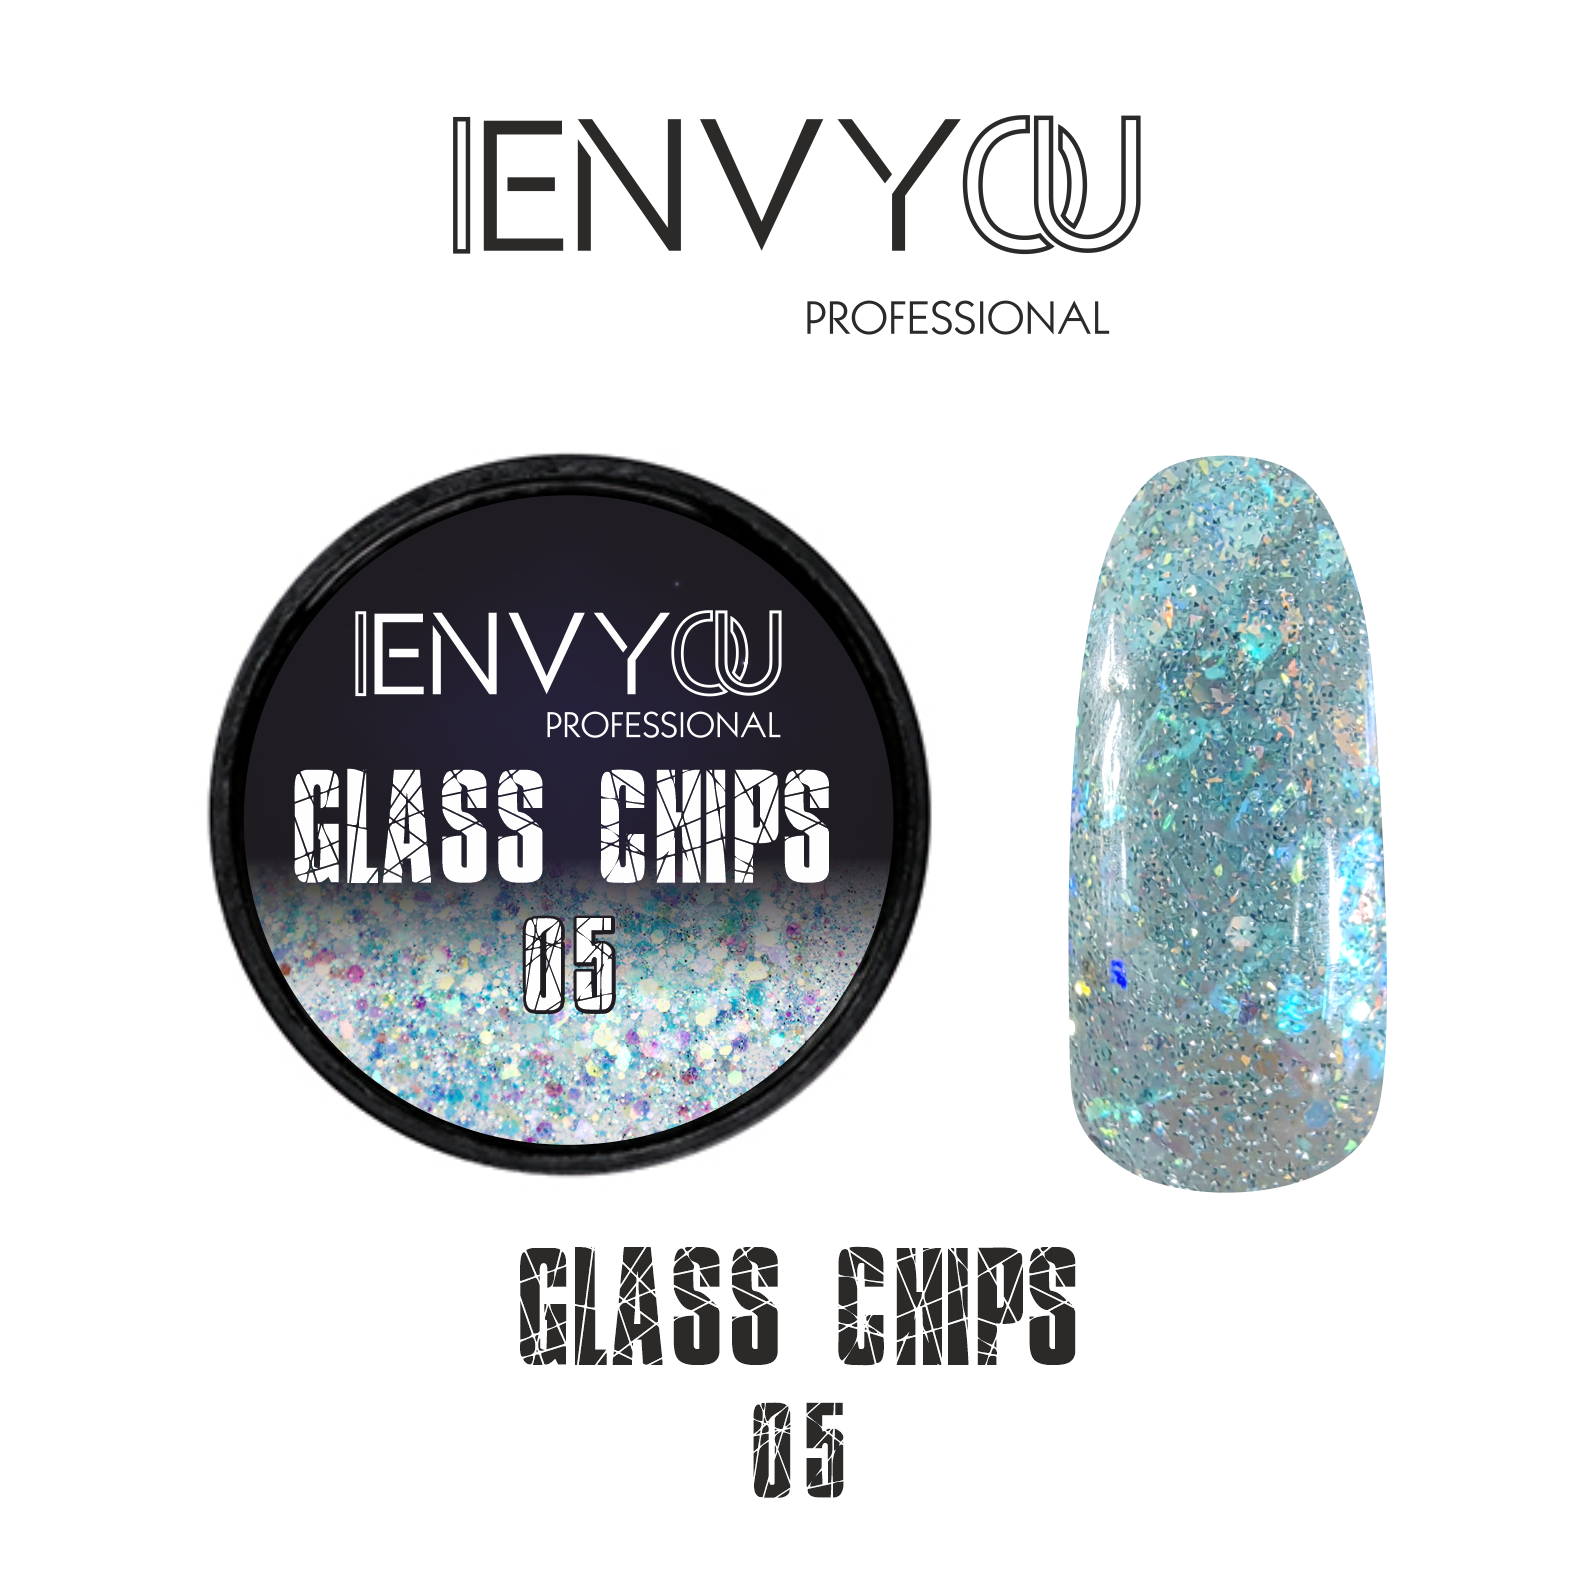 ENVY Glass Chips 05 6g